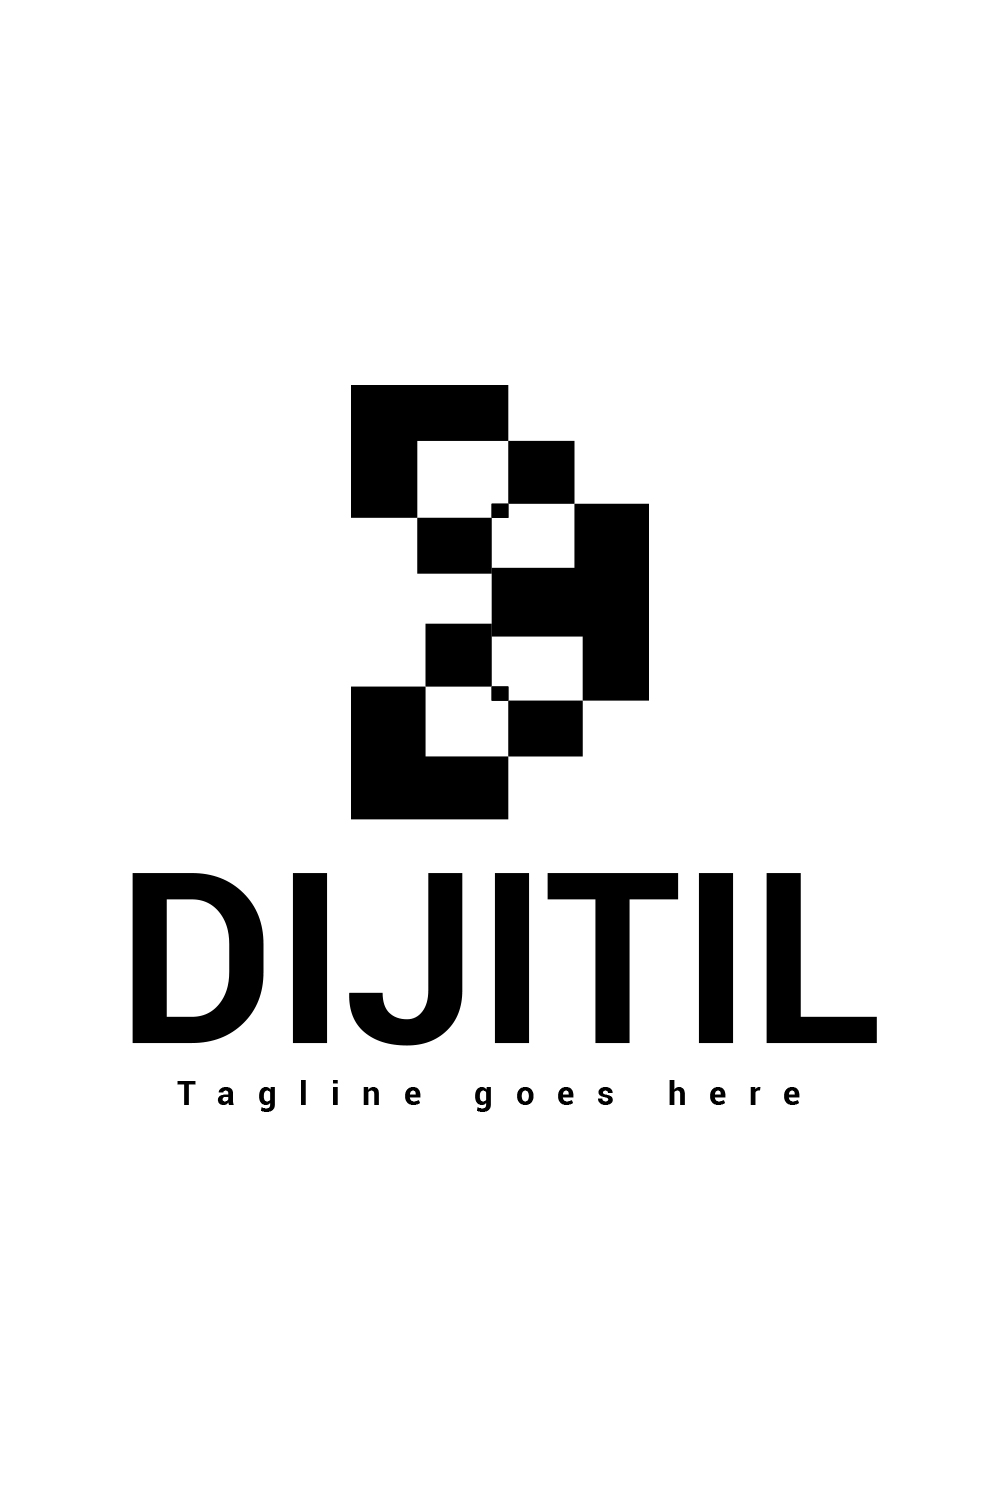 Letter D logo design pinterest preview image.